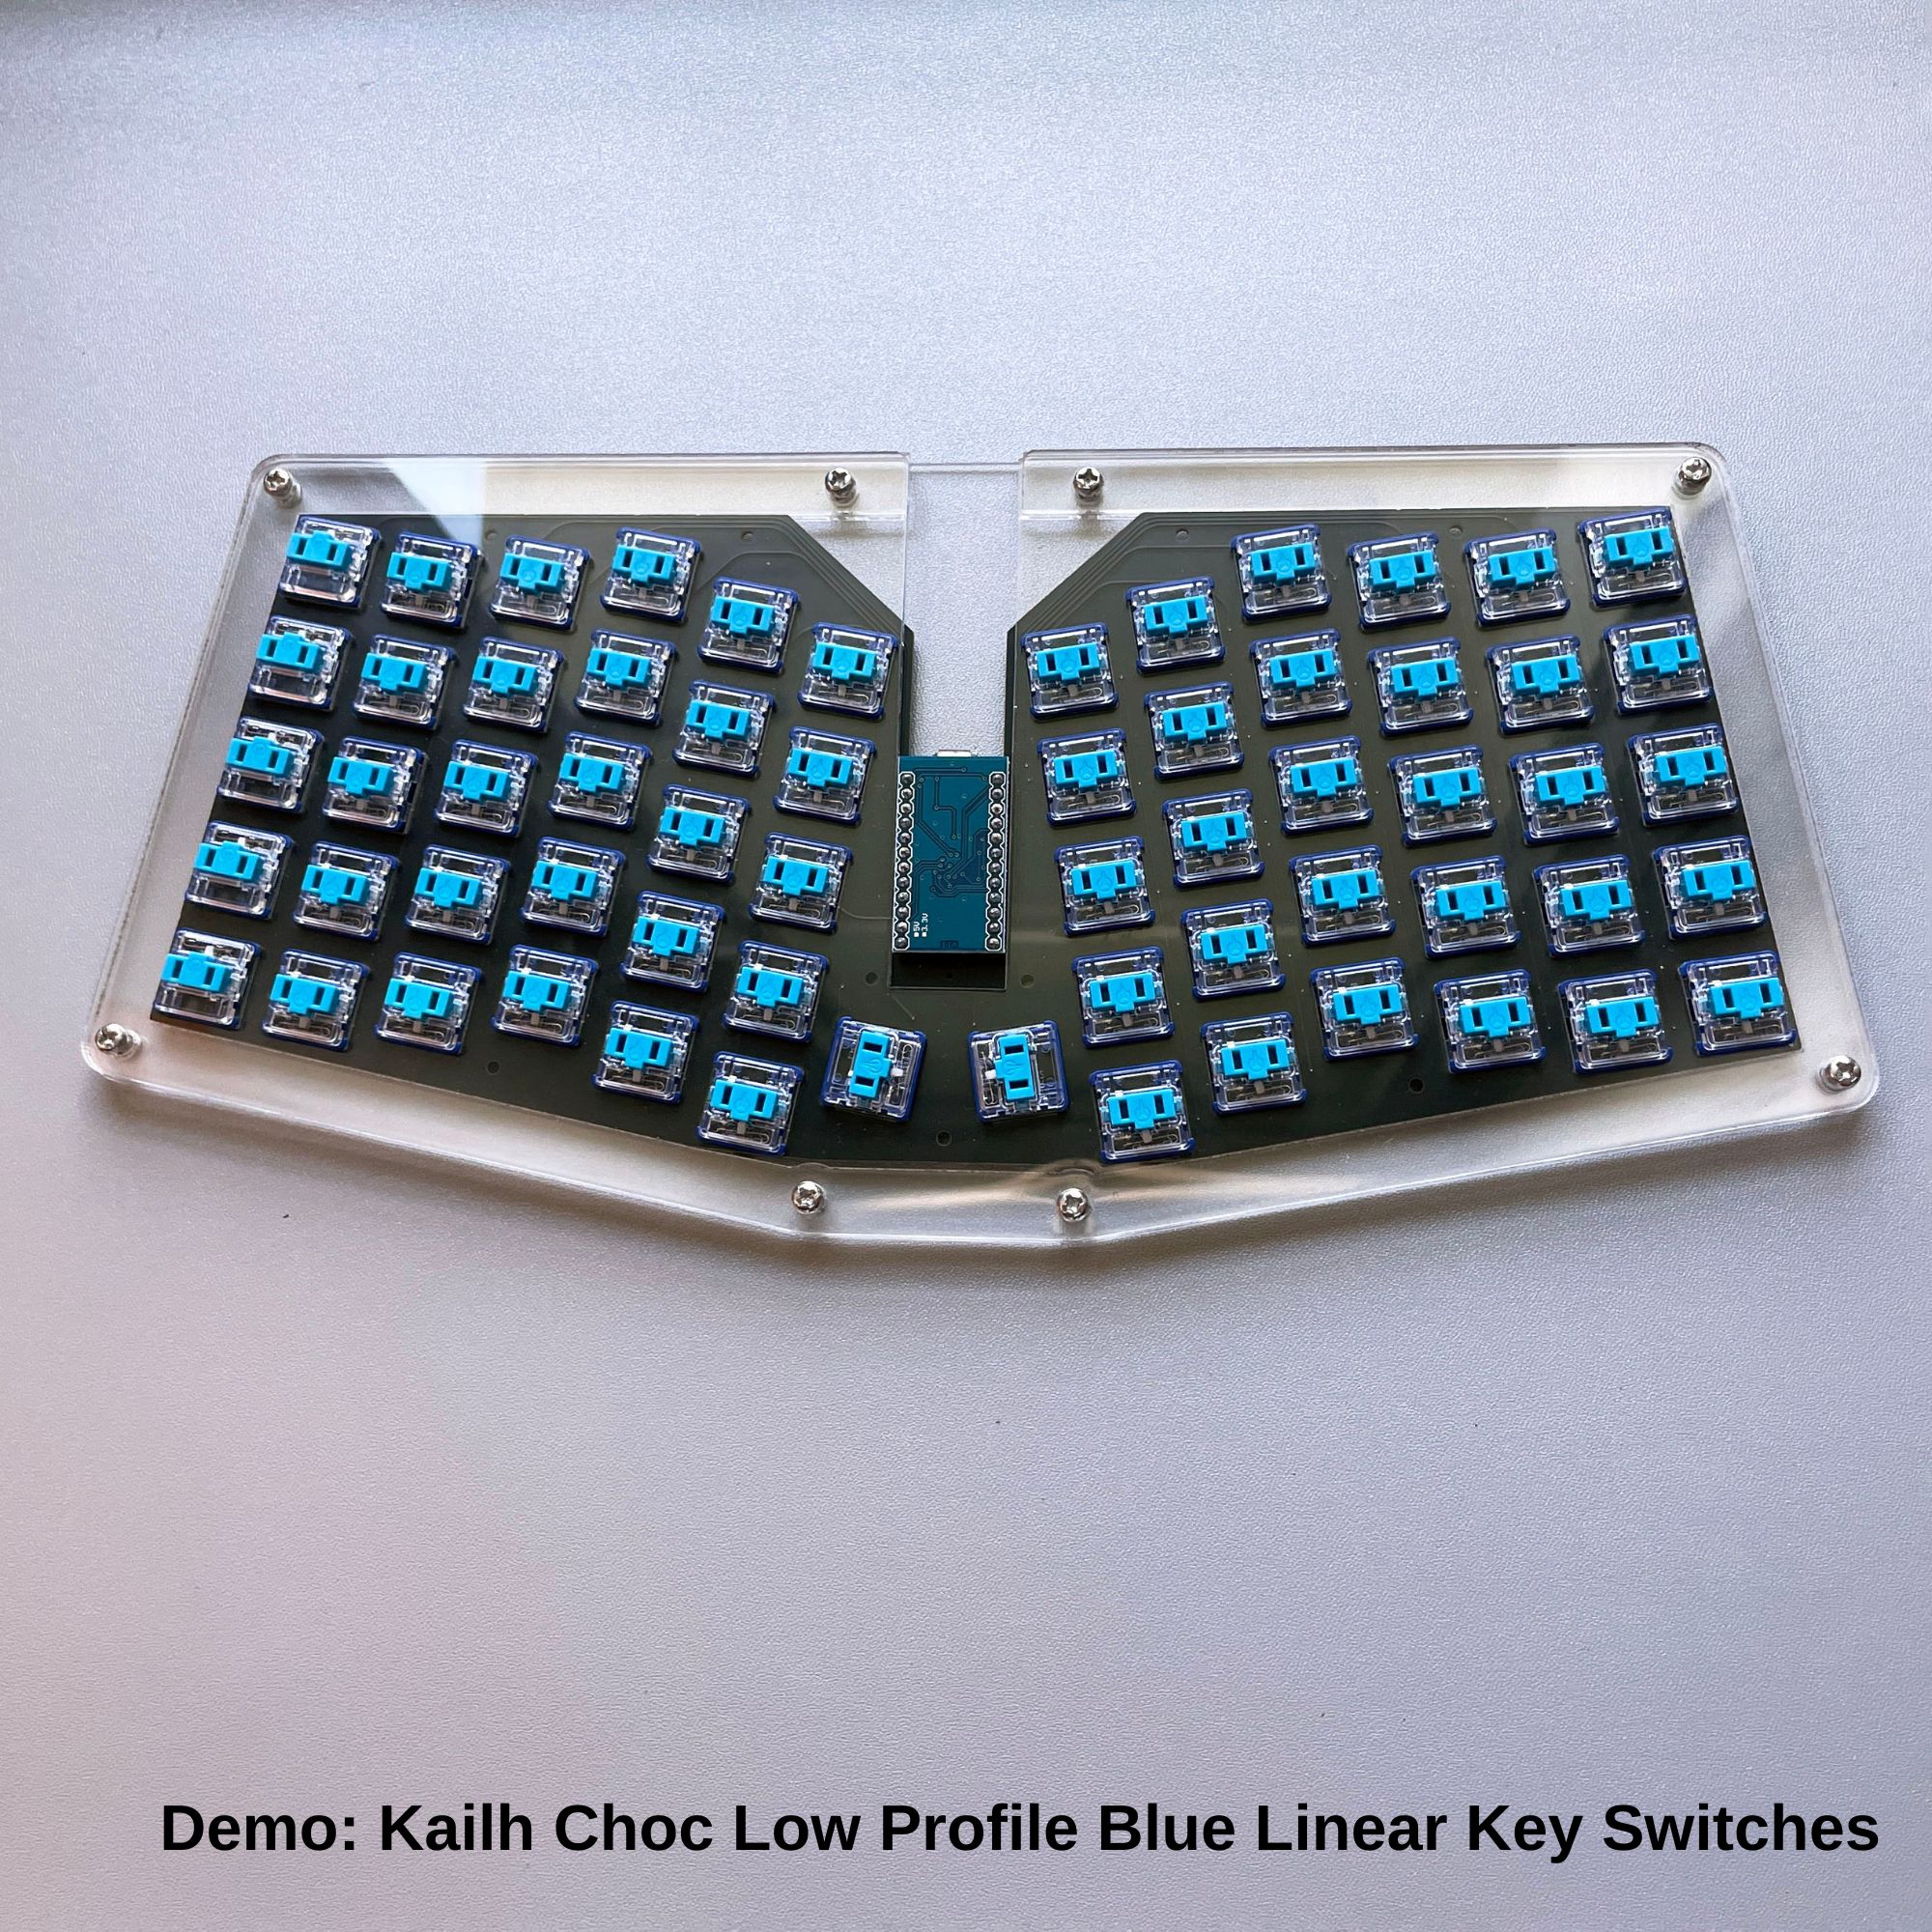 Pre-soldered Hotreus62 Hotswap MX / Choc v1 Low Profile 60% Keyboard